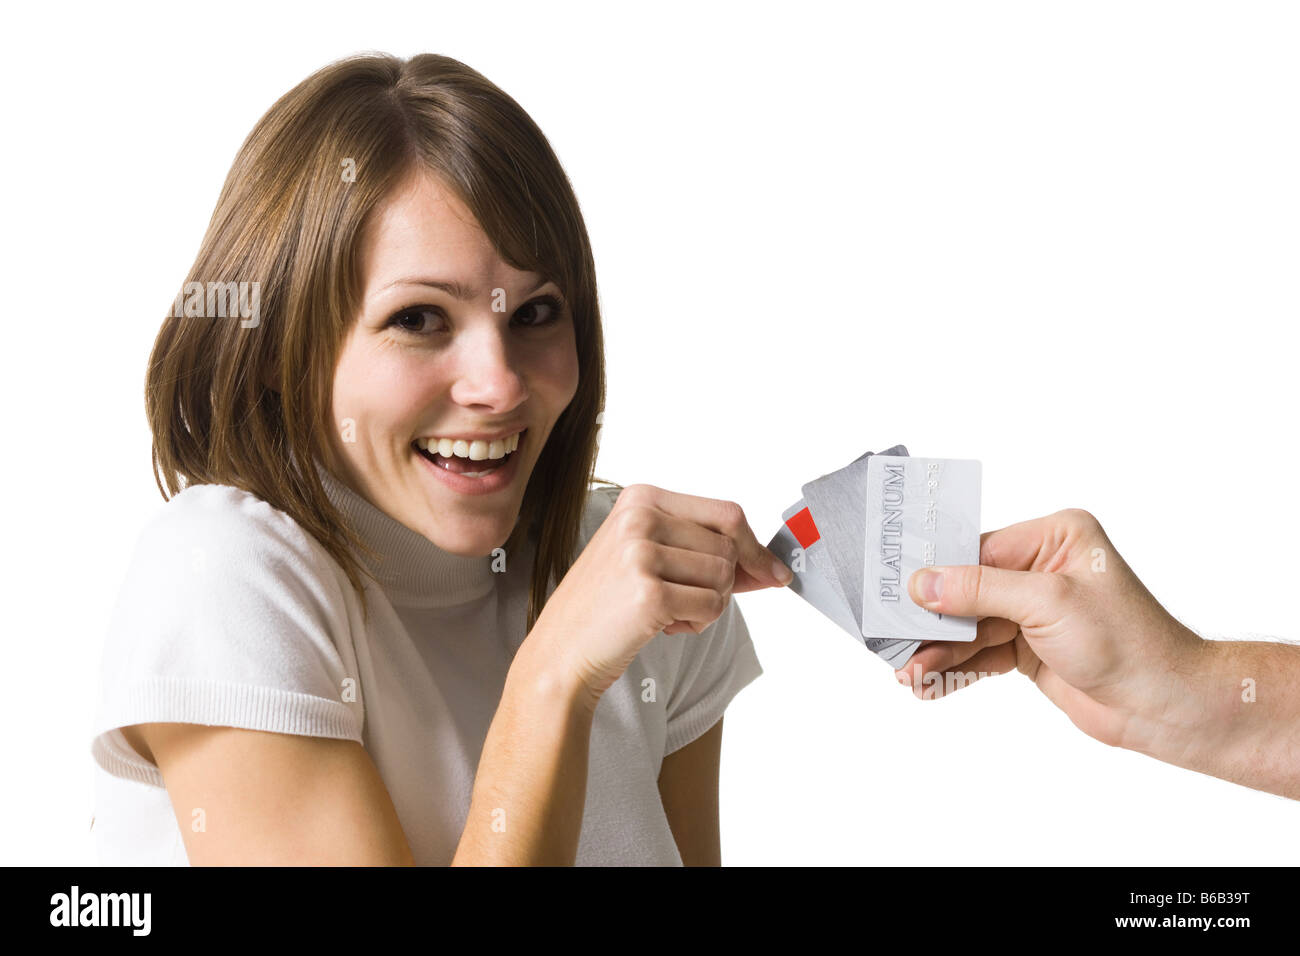 woman choosing a credit card Stock Photo